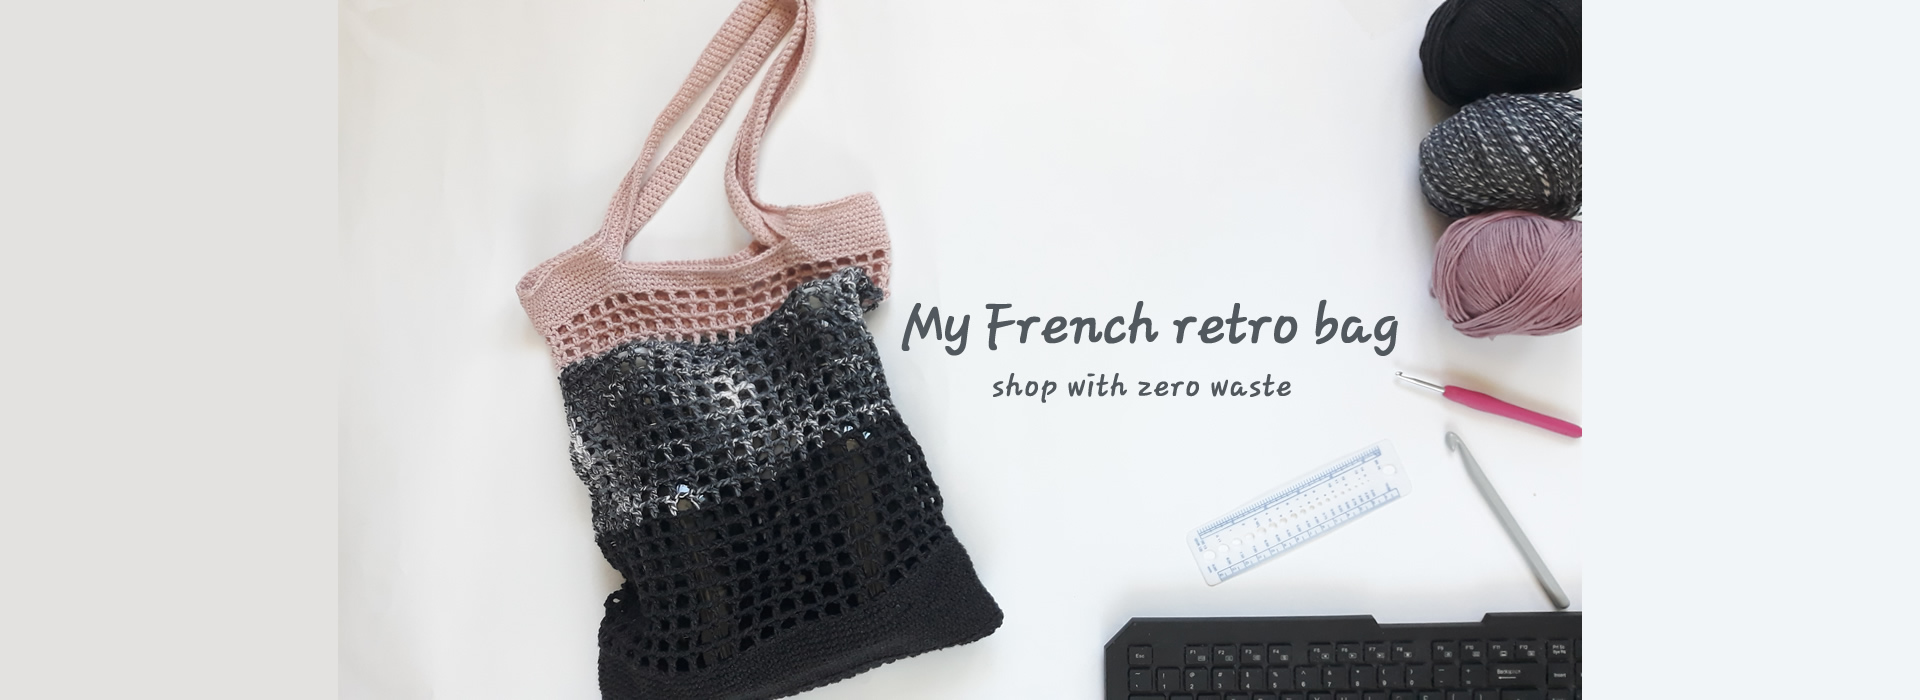 Portobelloknit French retro bag